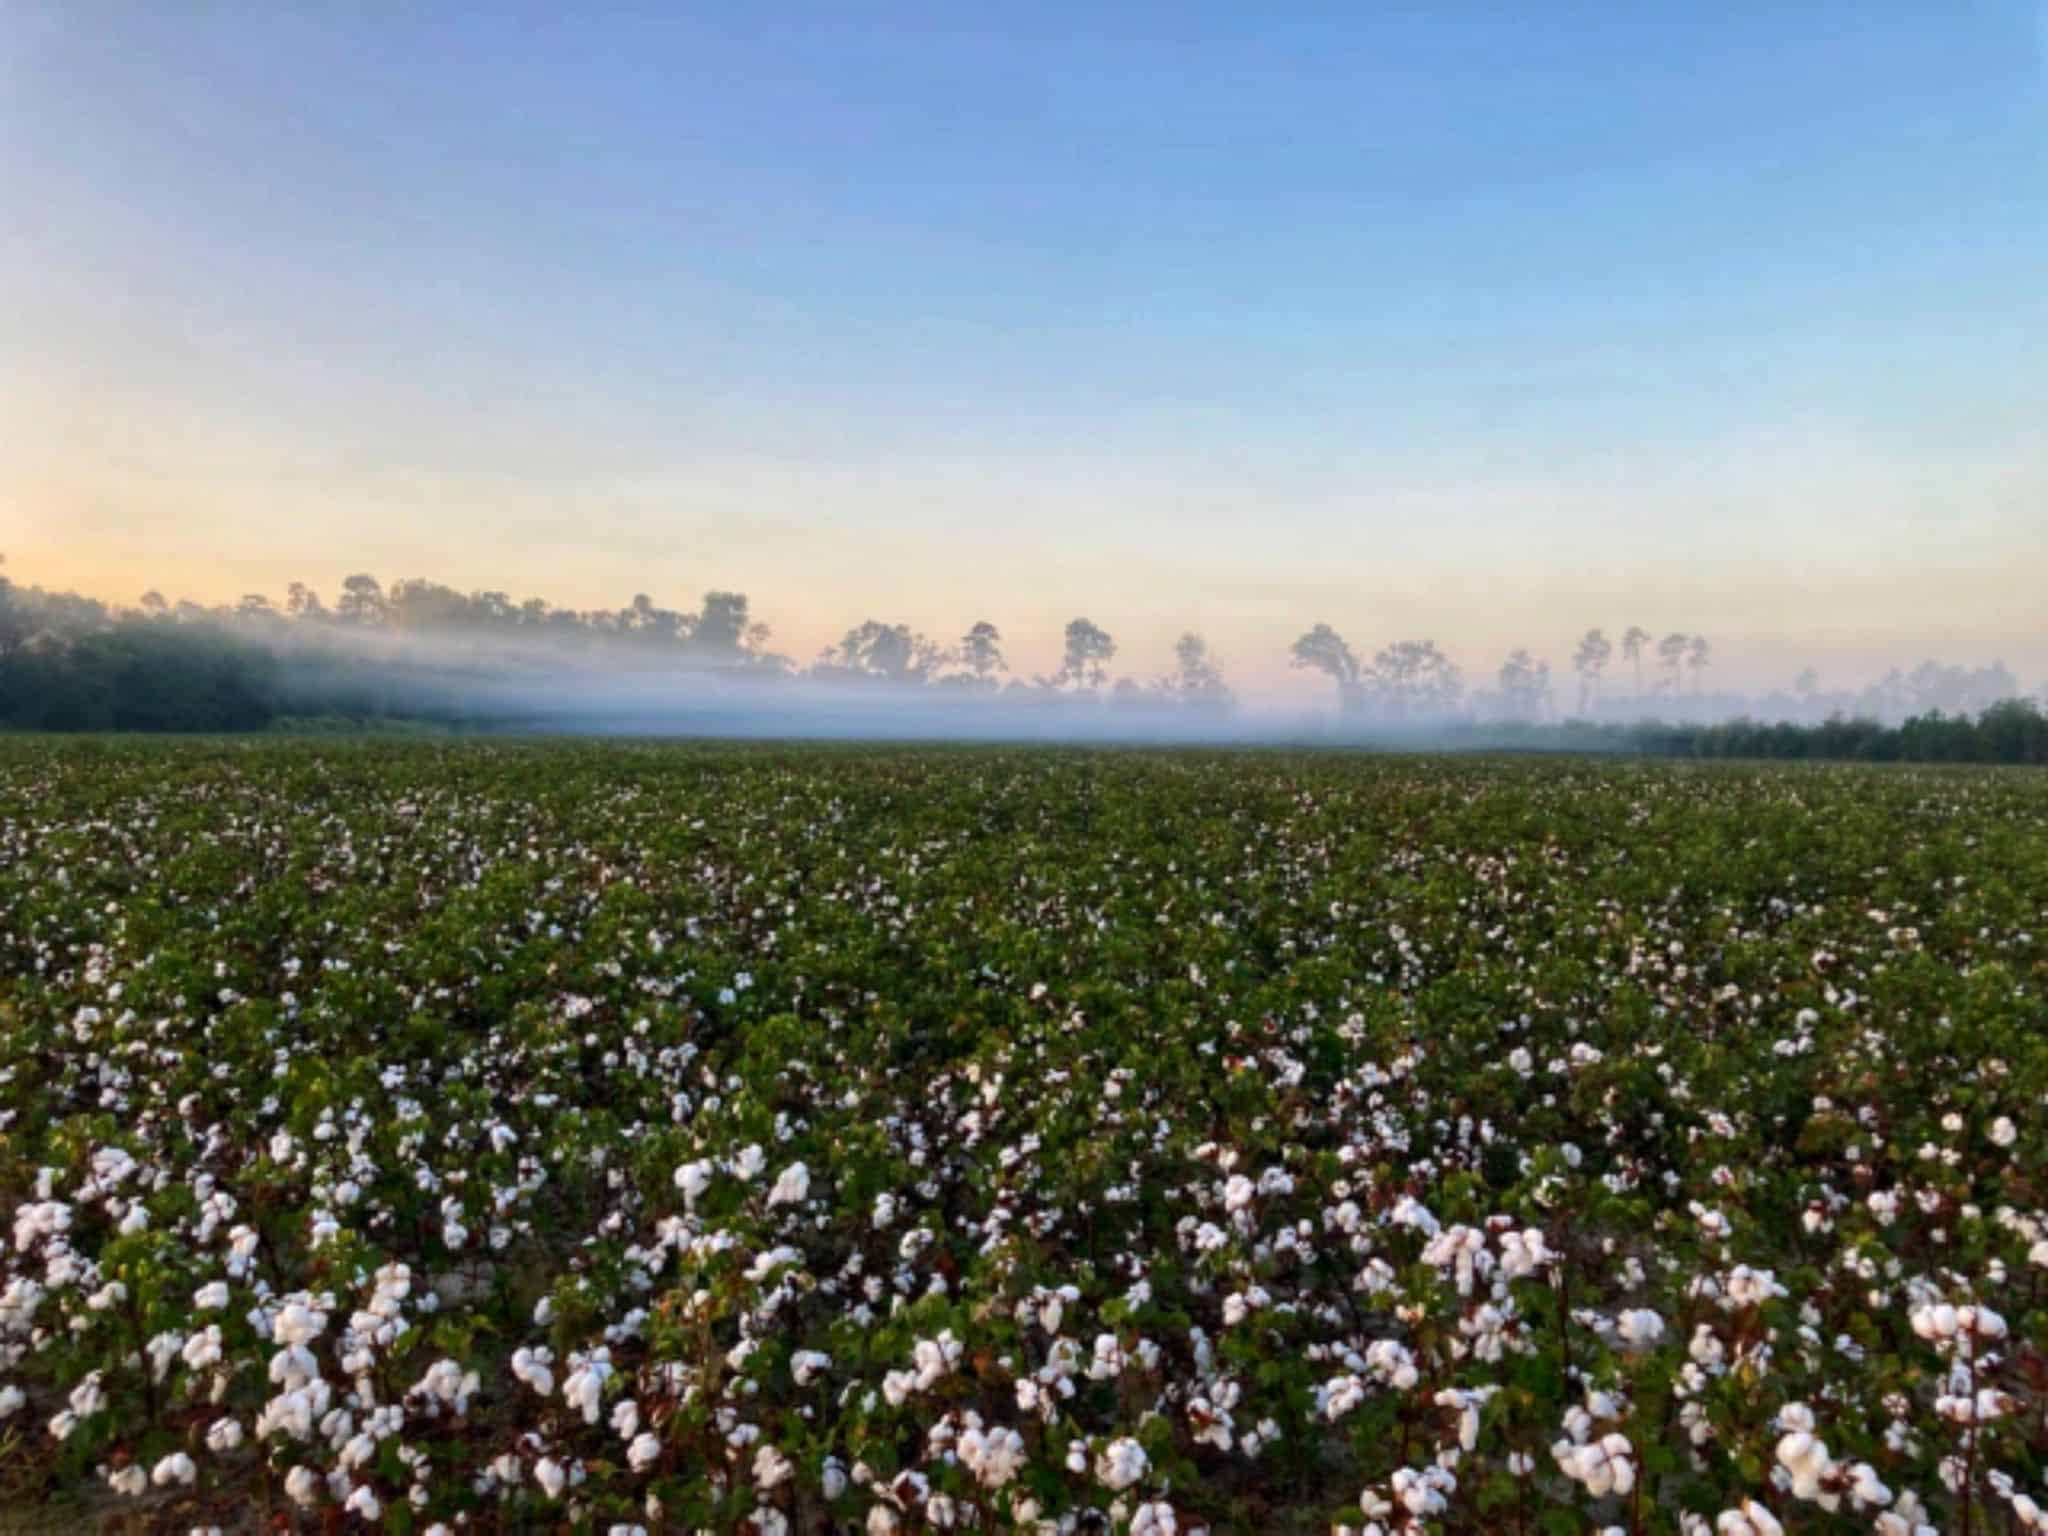 South Carolina cotton fields at sunrise